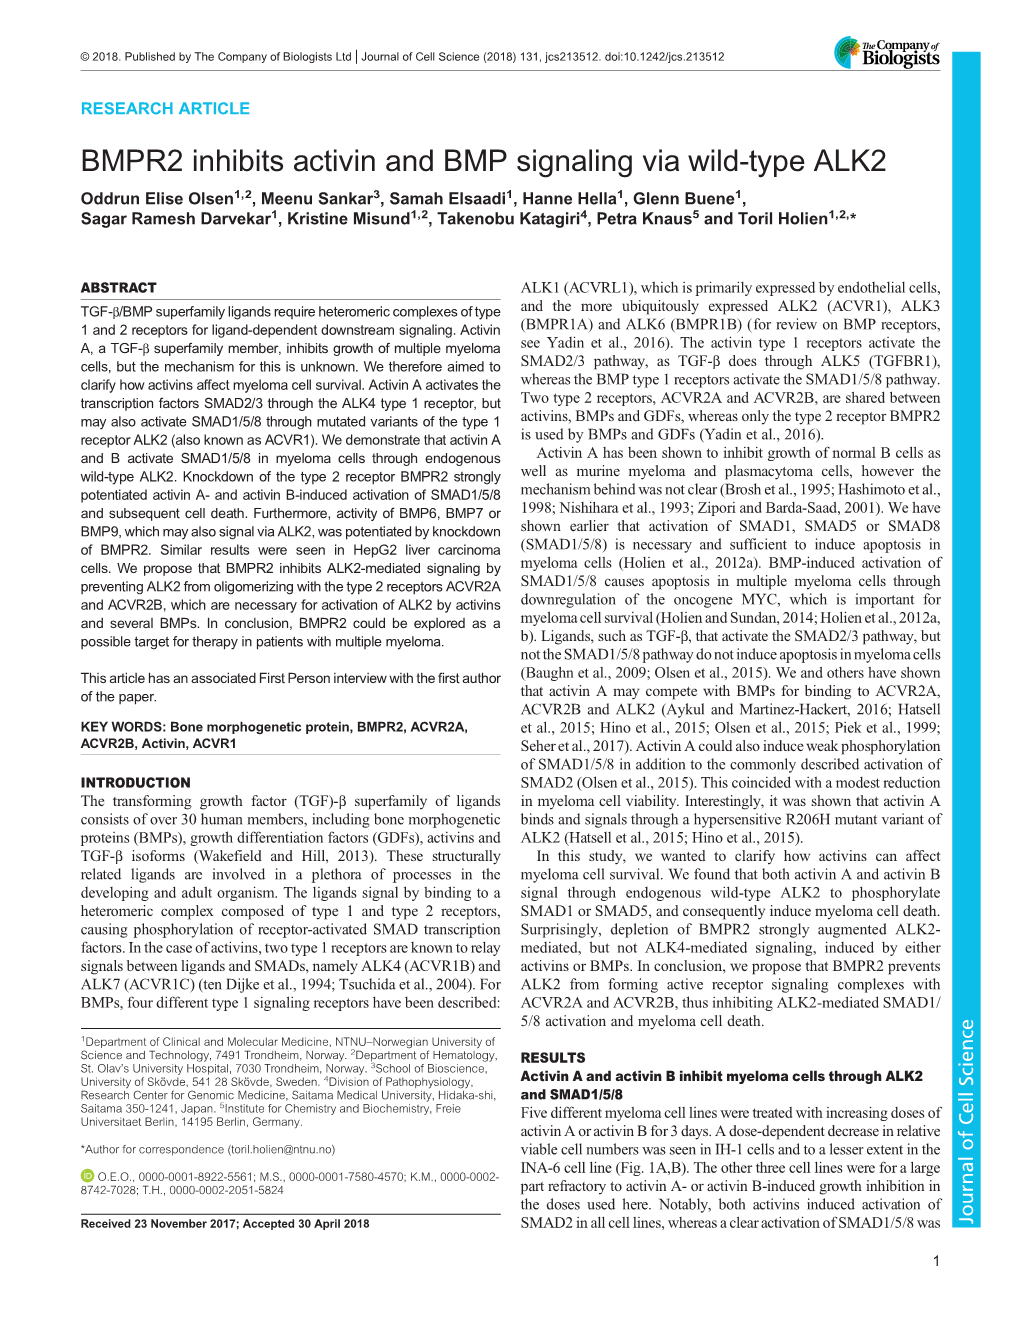 BMPR2 Inhibits Activin and BMP Signaling Via Wild-Type ALK2